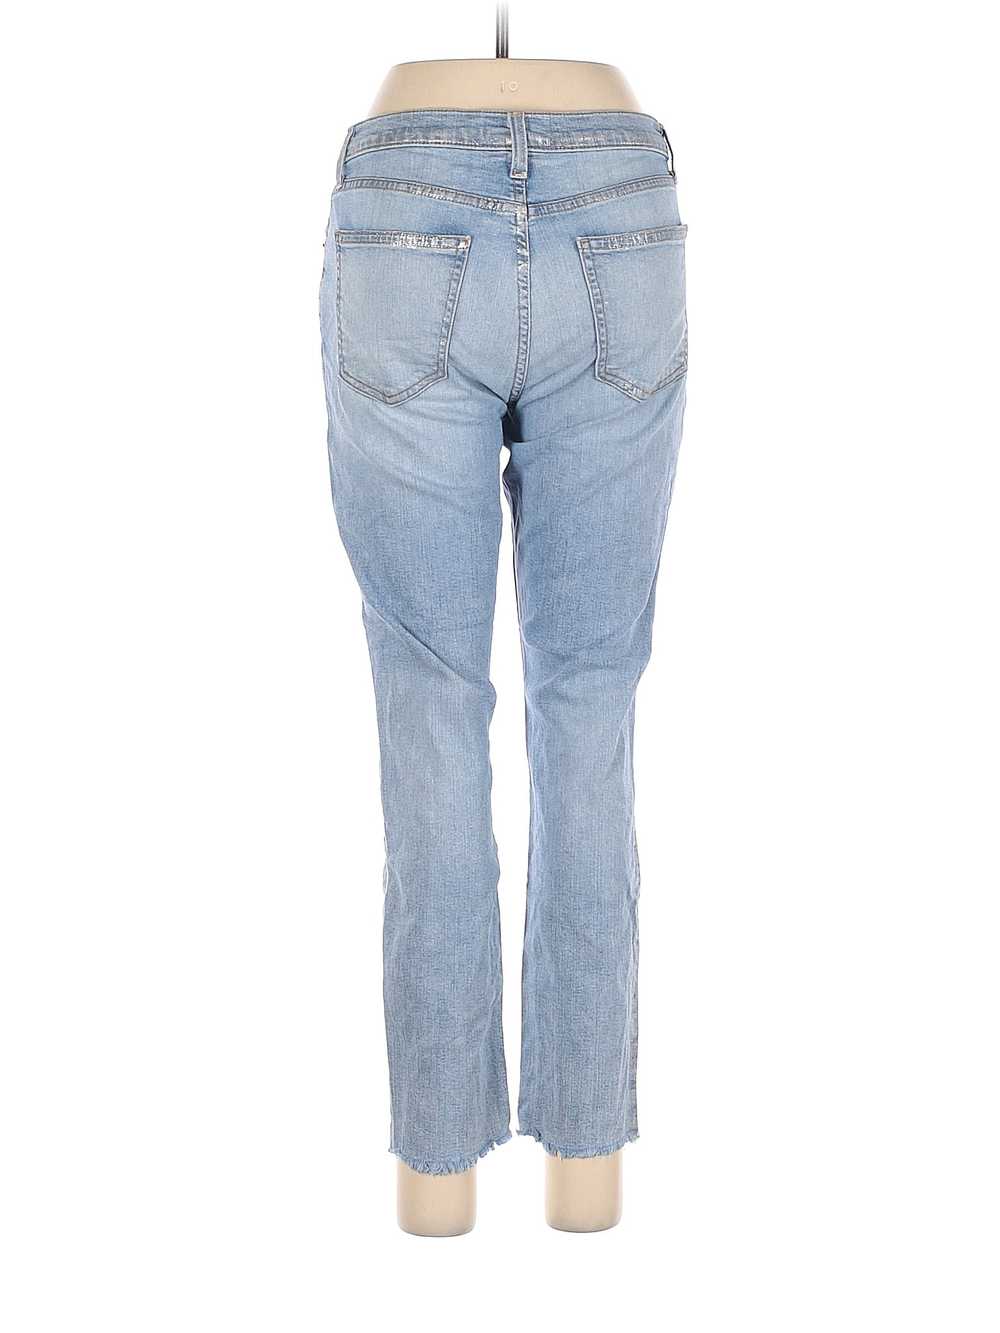 Current/Elliott Women Blue Jeans 28W - image 2